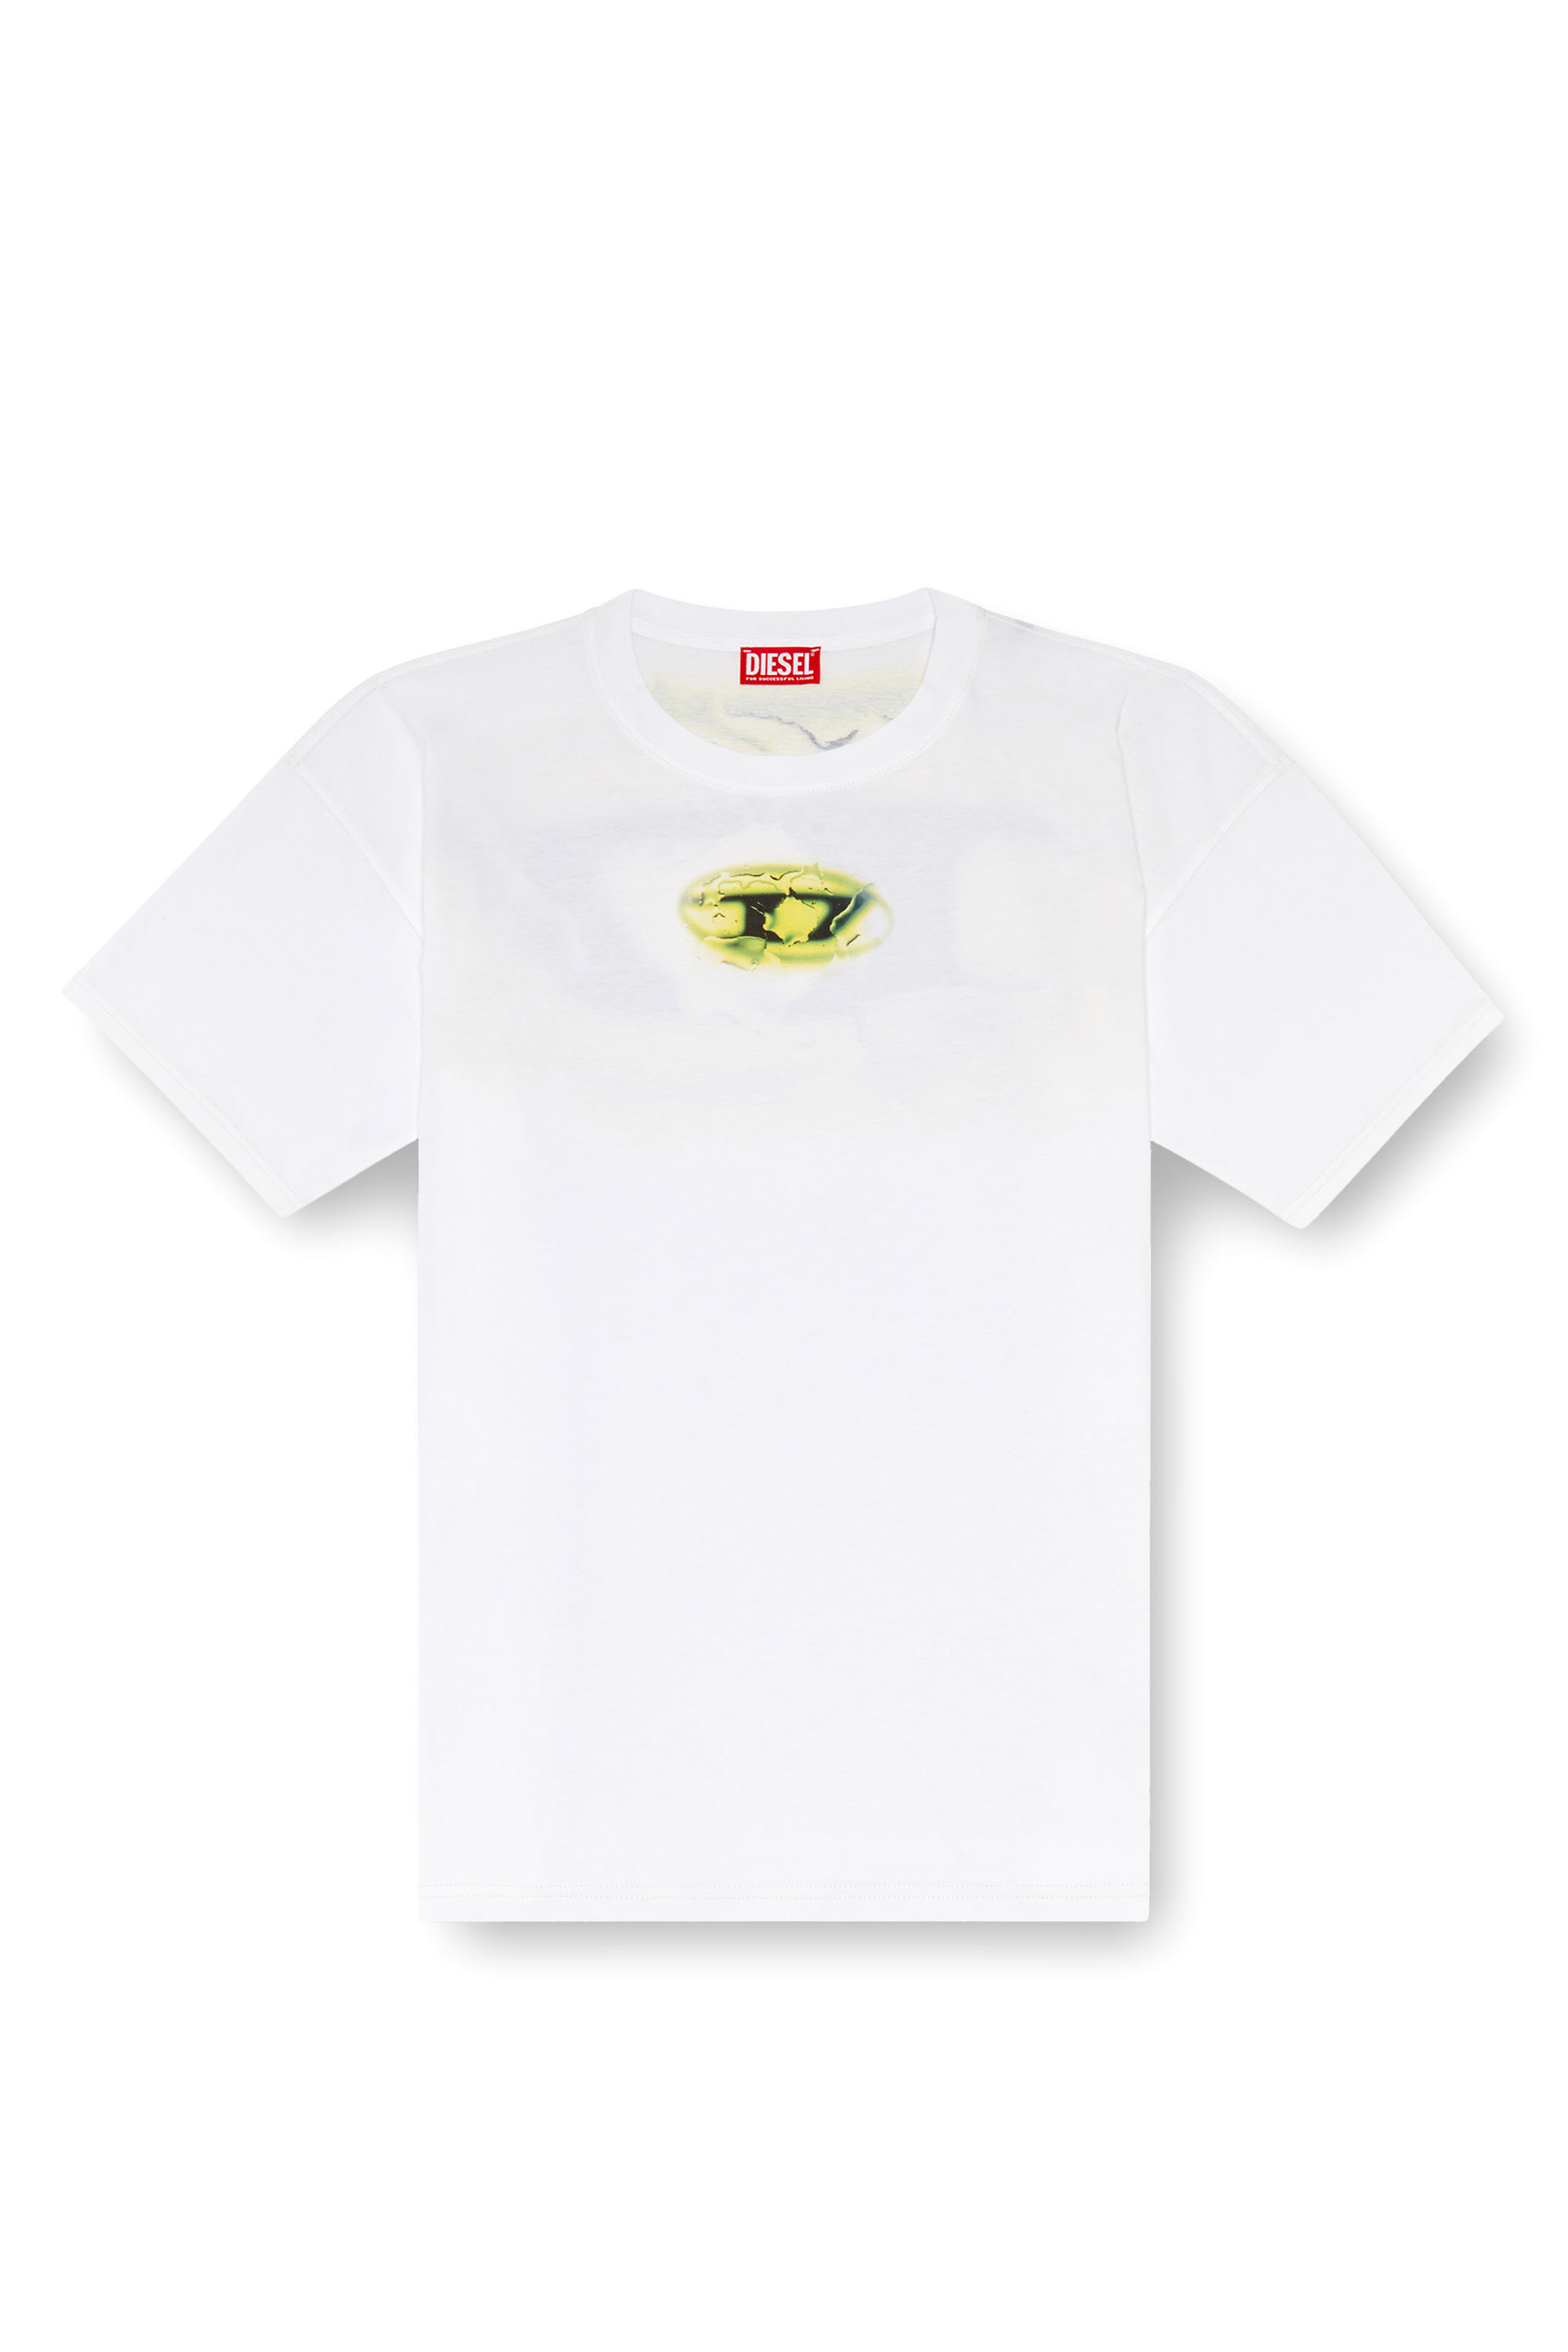 Diesel - T-BOXT-K3, Homme T-shirt avec logo effet lumineux in Blanc - Image 3